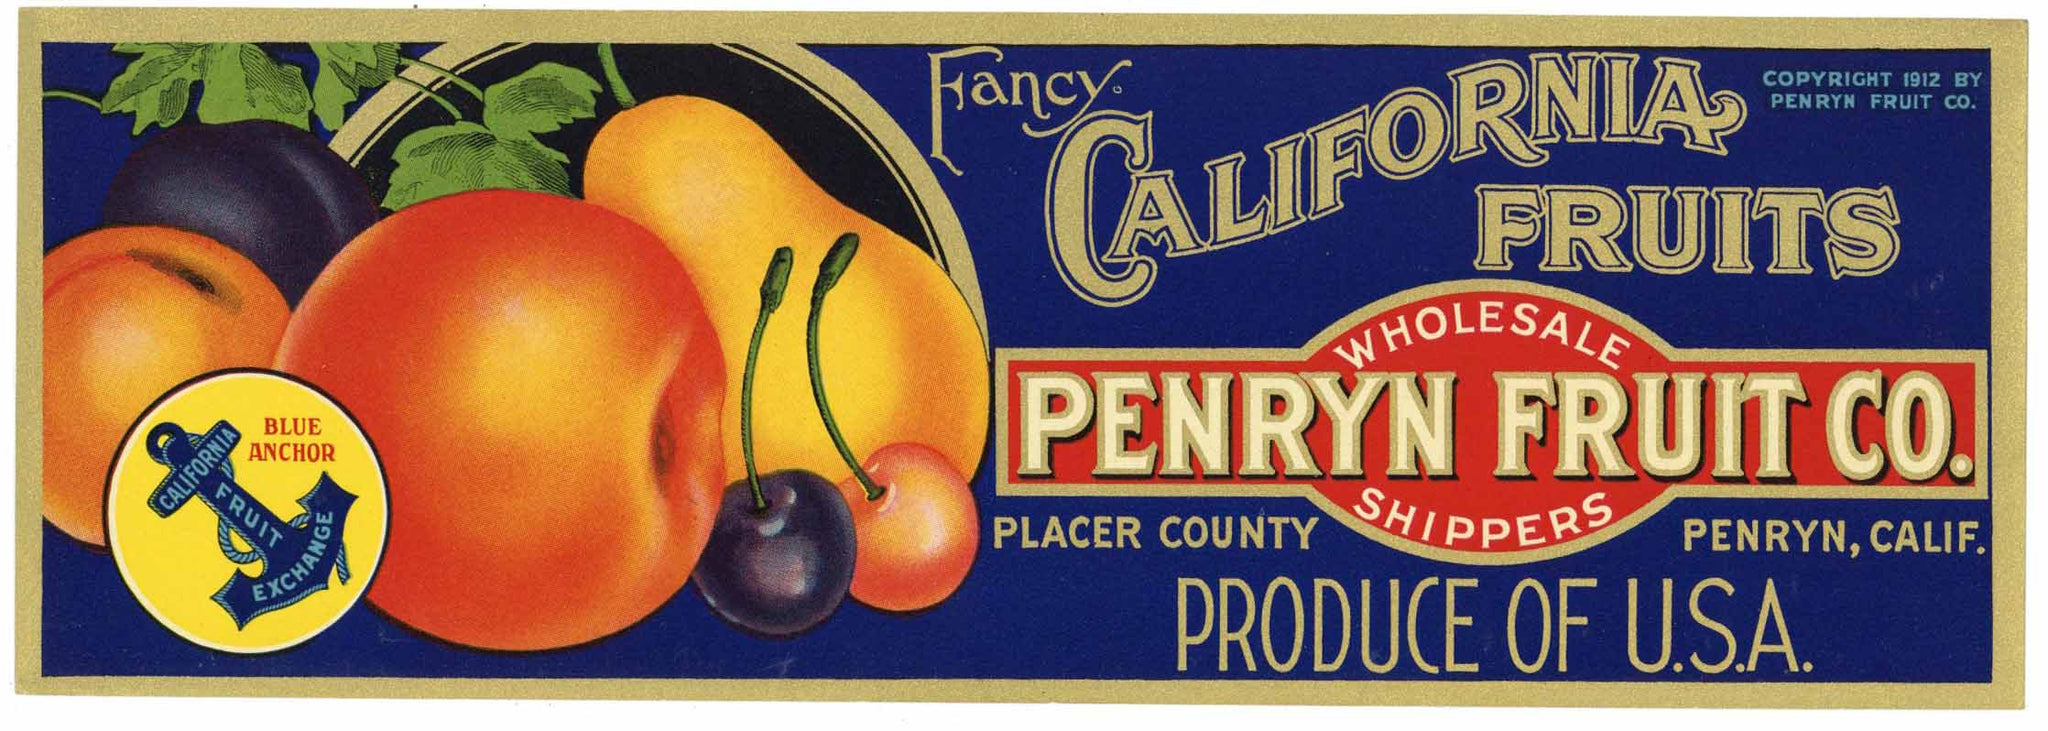 Penryn Fruit Co. Brand Vintage Placer County Fruit Crate Label